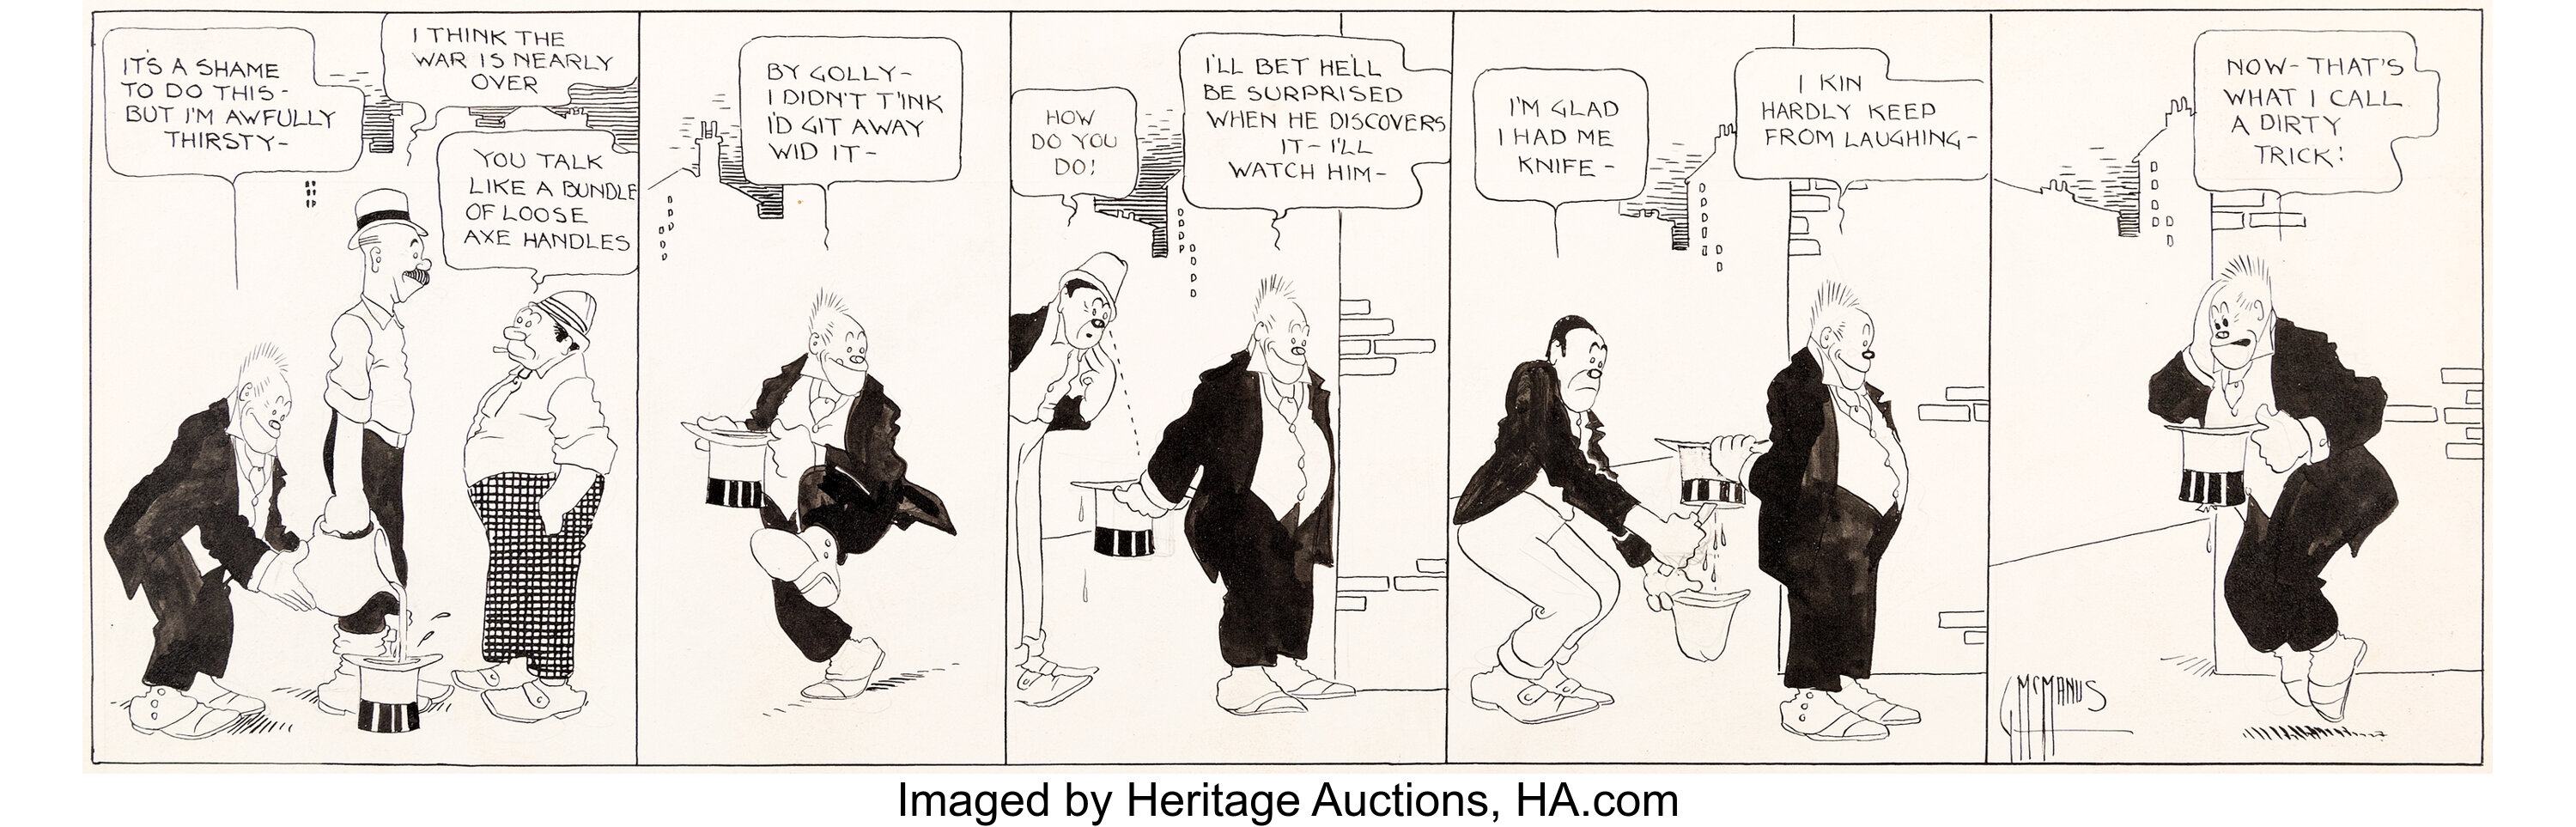 George McManus Bringing Up Father Daily Comic Strip Original Art | Lot  #93424 | Heritage Auctions